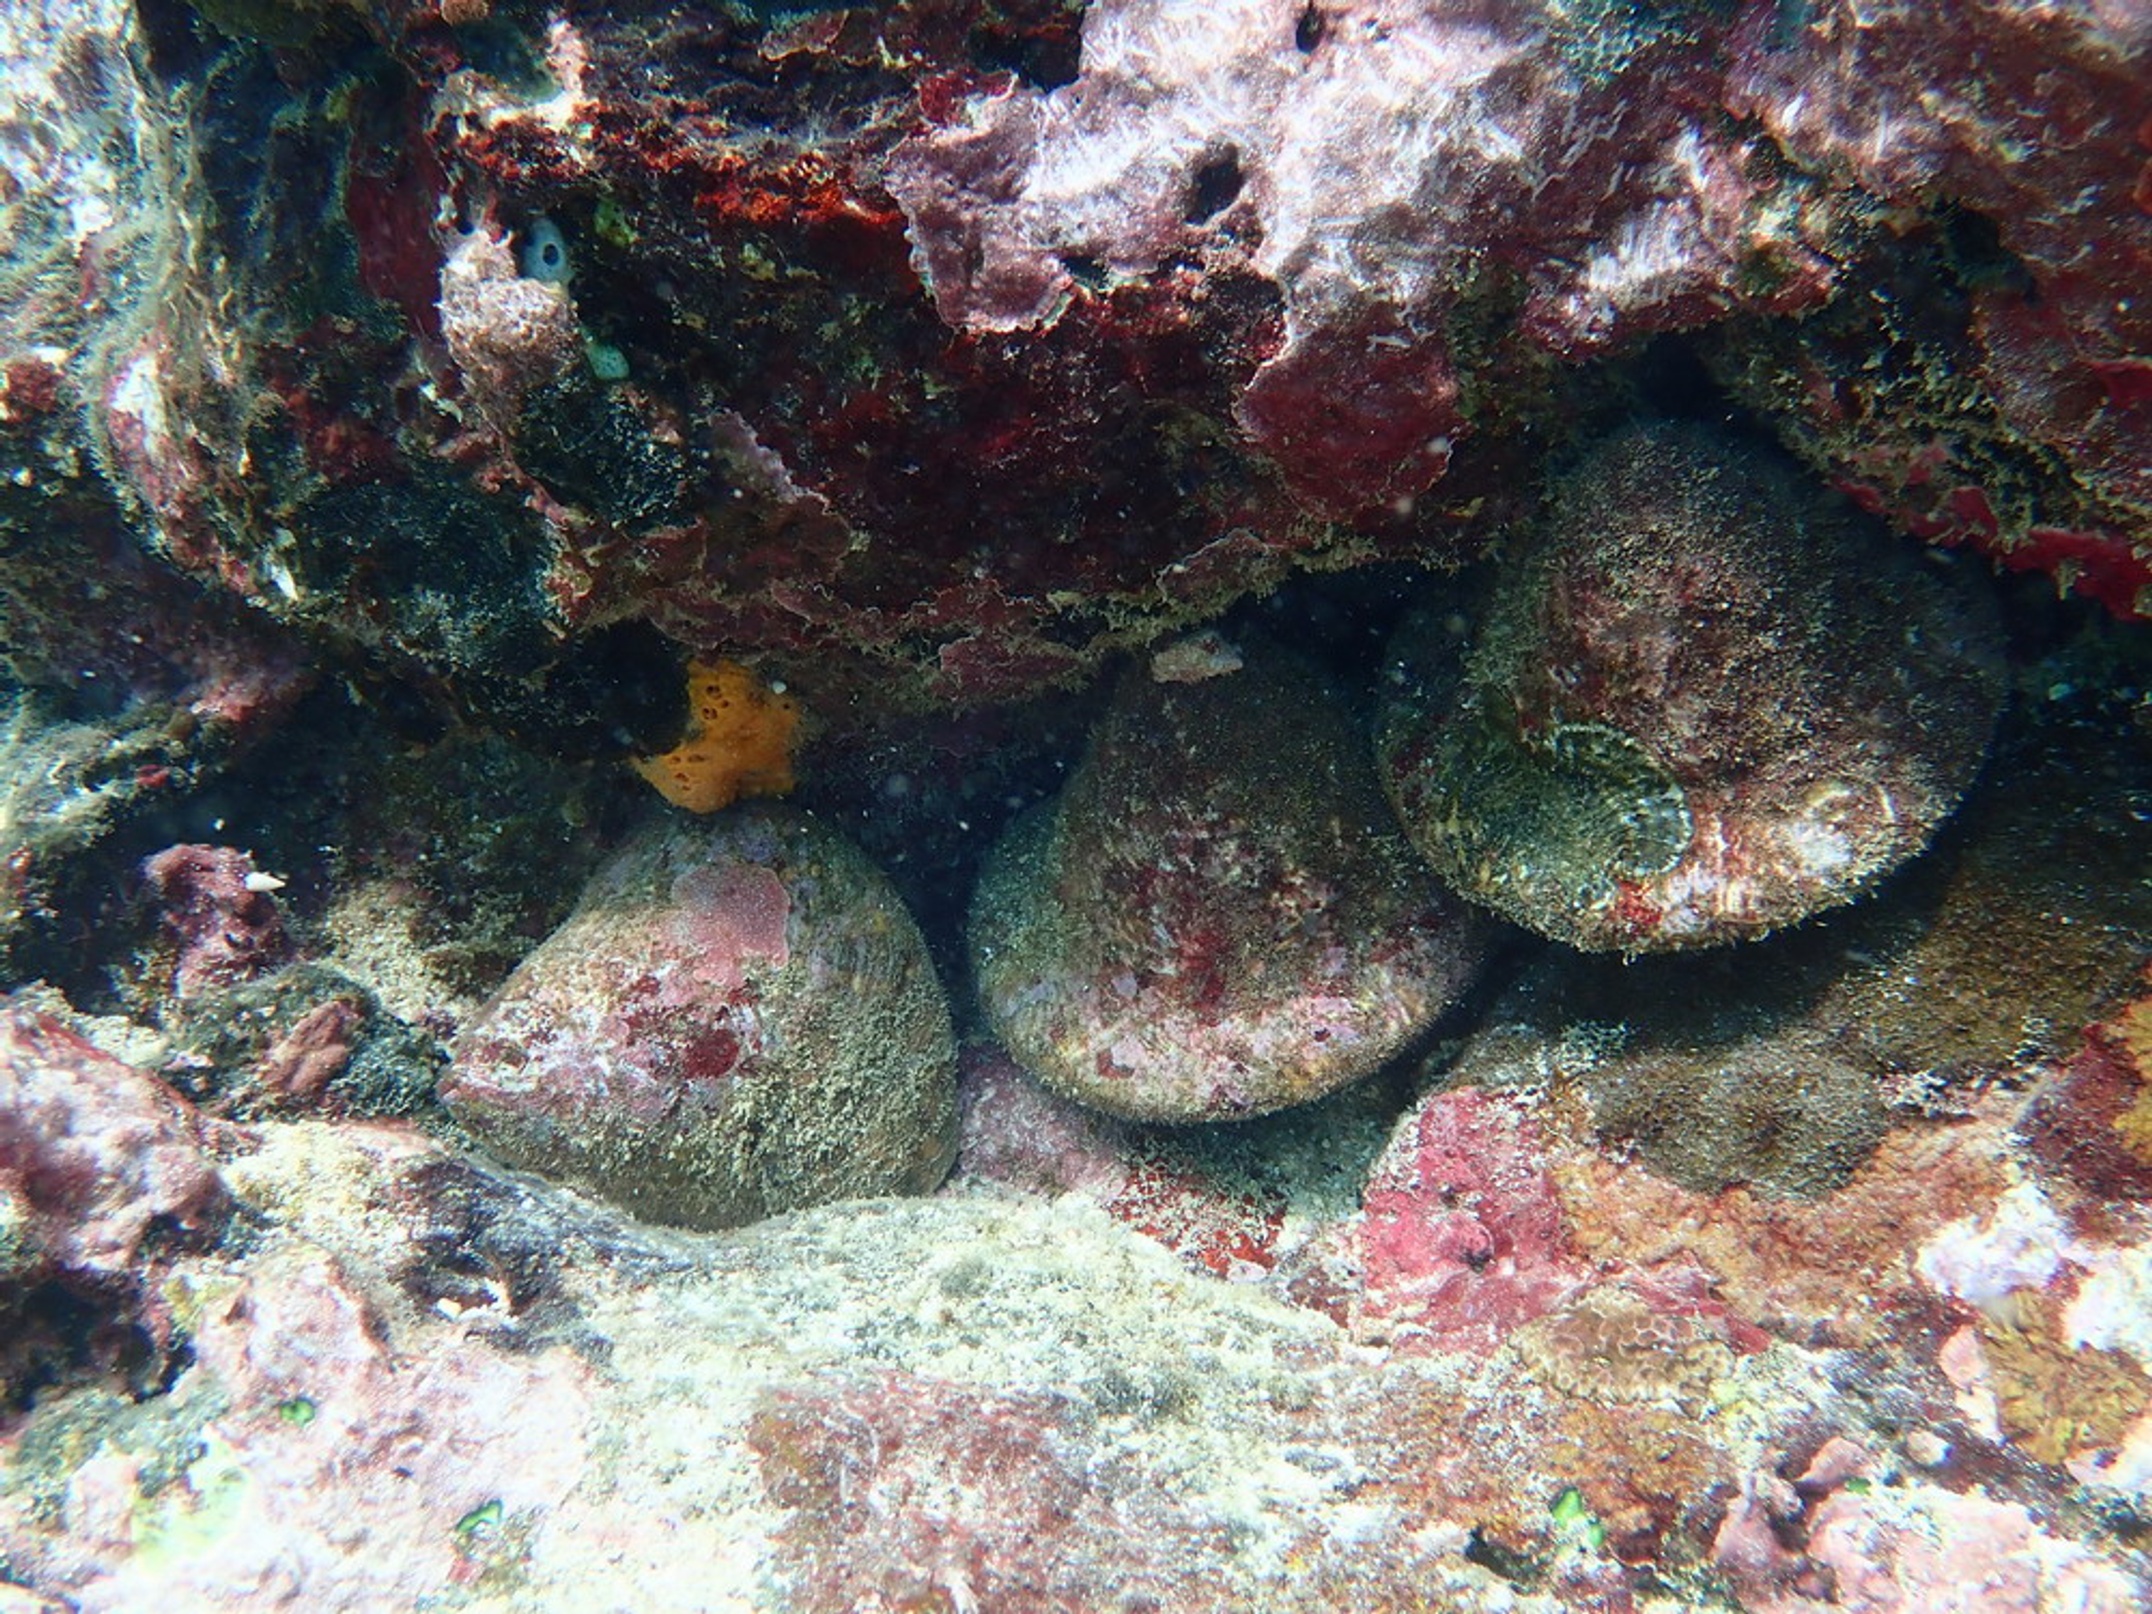 Three sea snail shells under a ledge